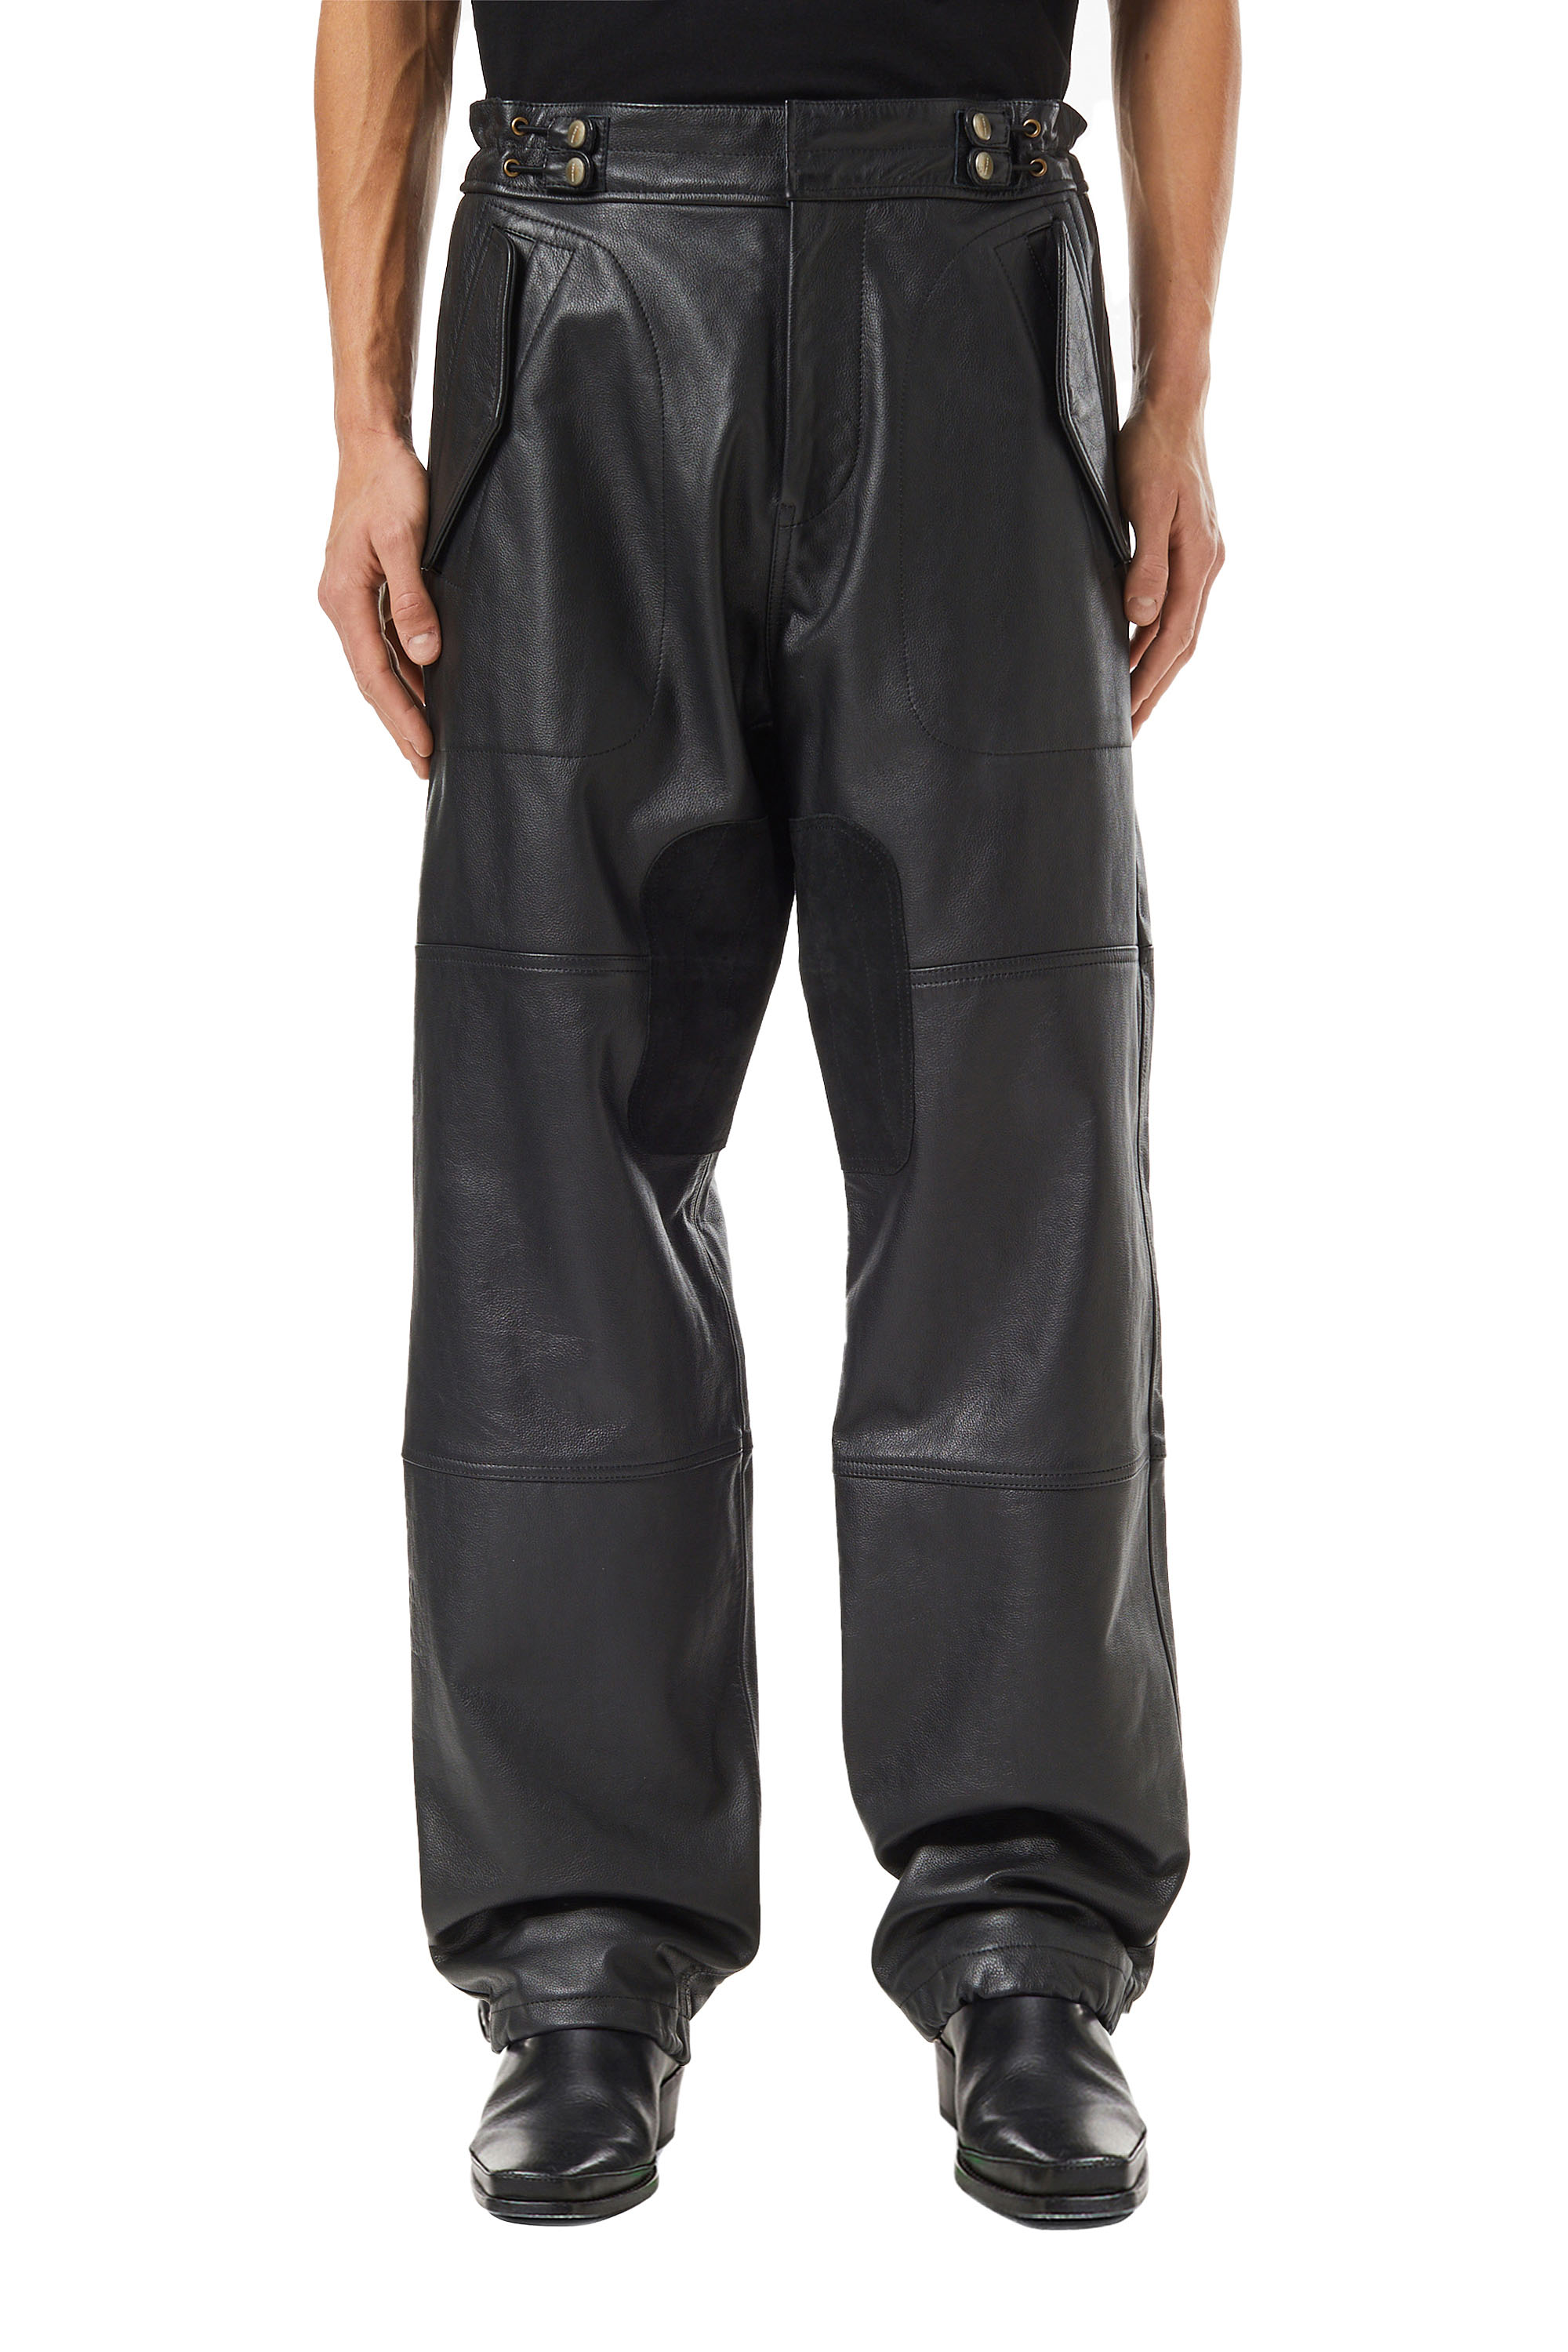 P-TIME Man: Leather pants | Diesel